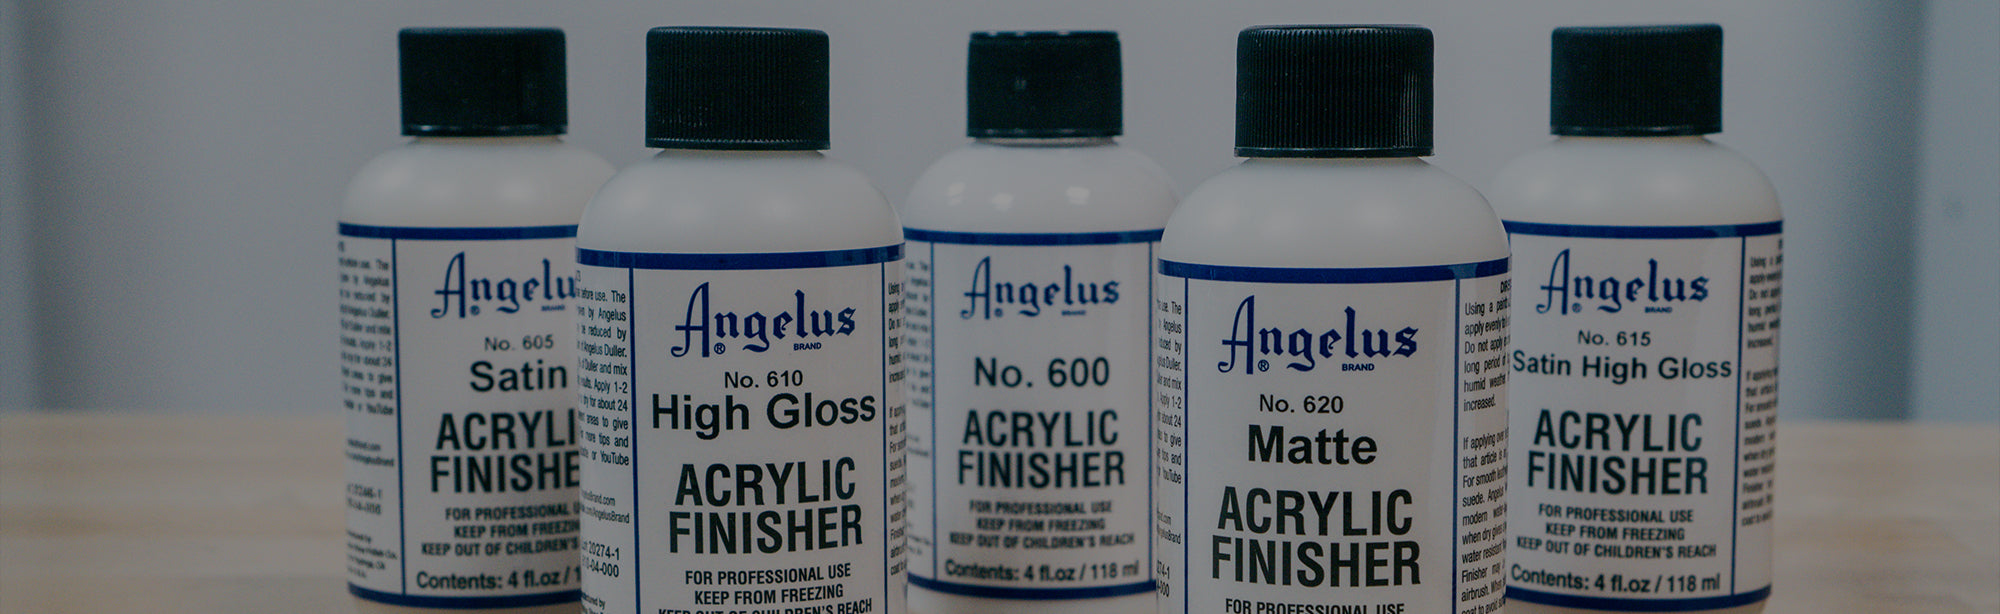  Angelus Acrylic Finisher 615 Satin High Gloss 4oz : Tools &  Home Improvement